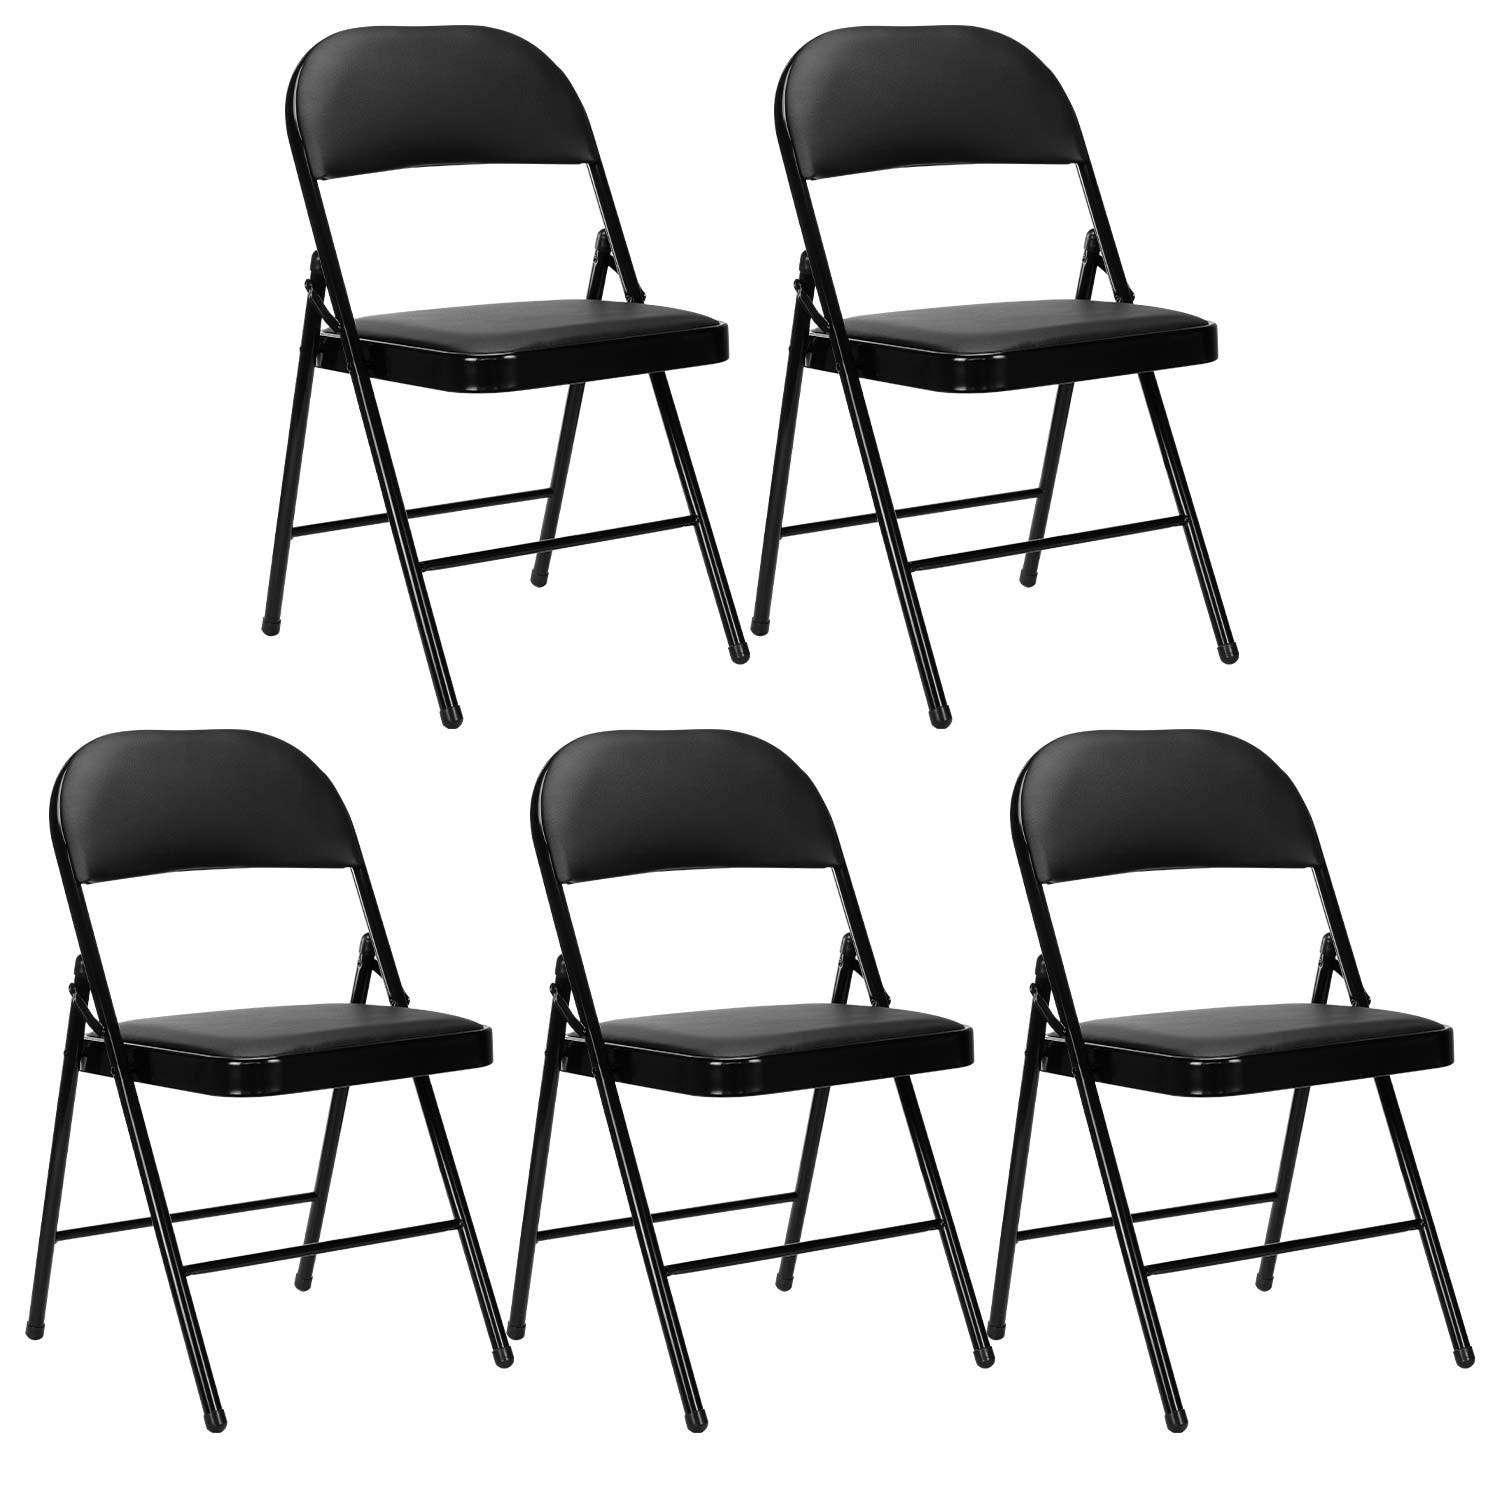 Alquiler de sillas plegables acolchadas negras